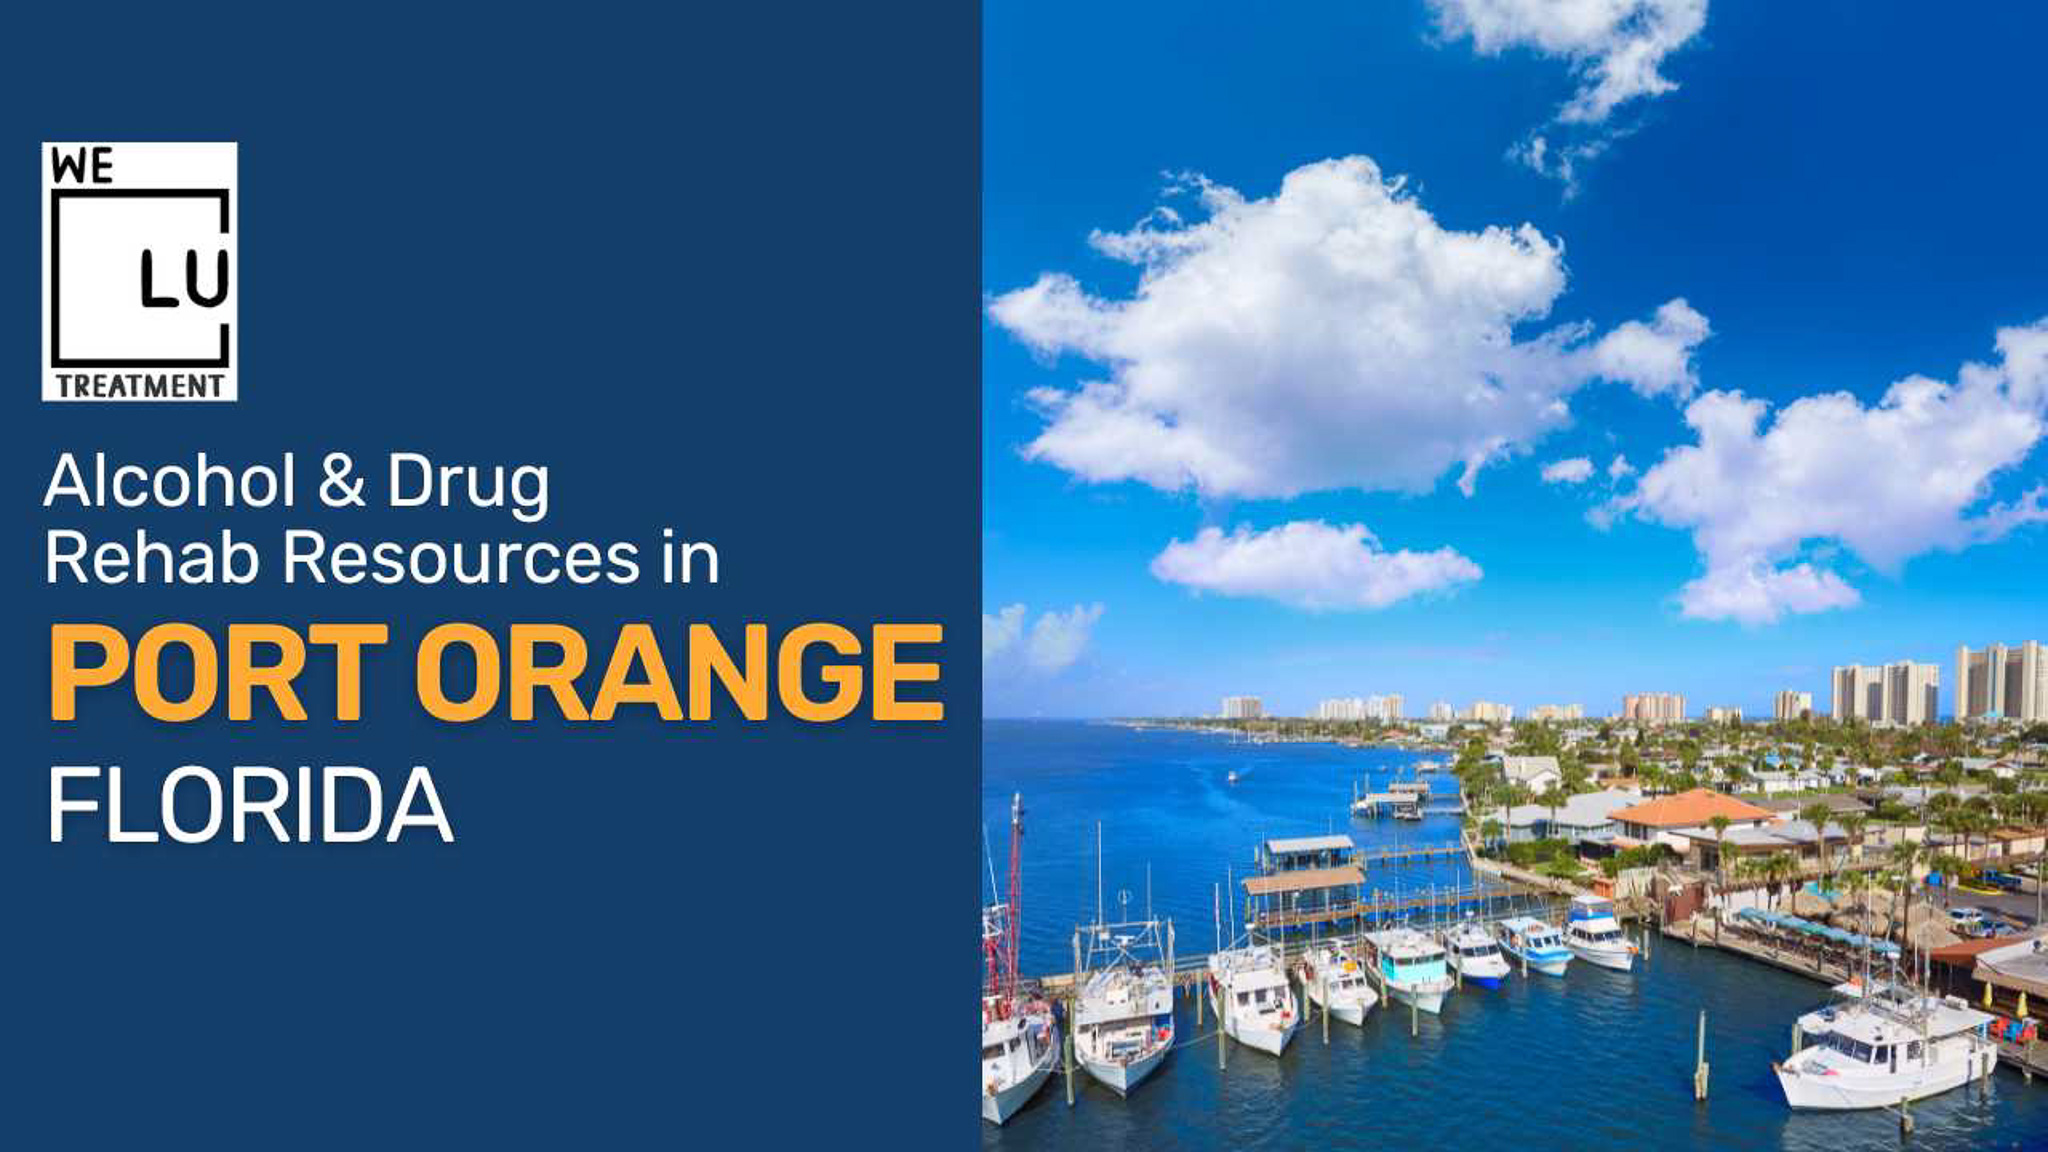 Port Orange FL (SA) We Level Up treatment center for drug and alcohol rehab detox and mental health services - Image 1